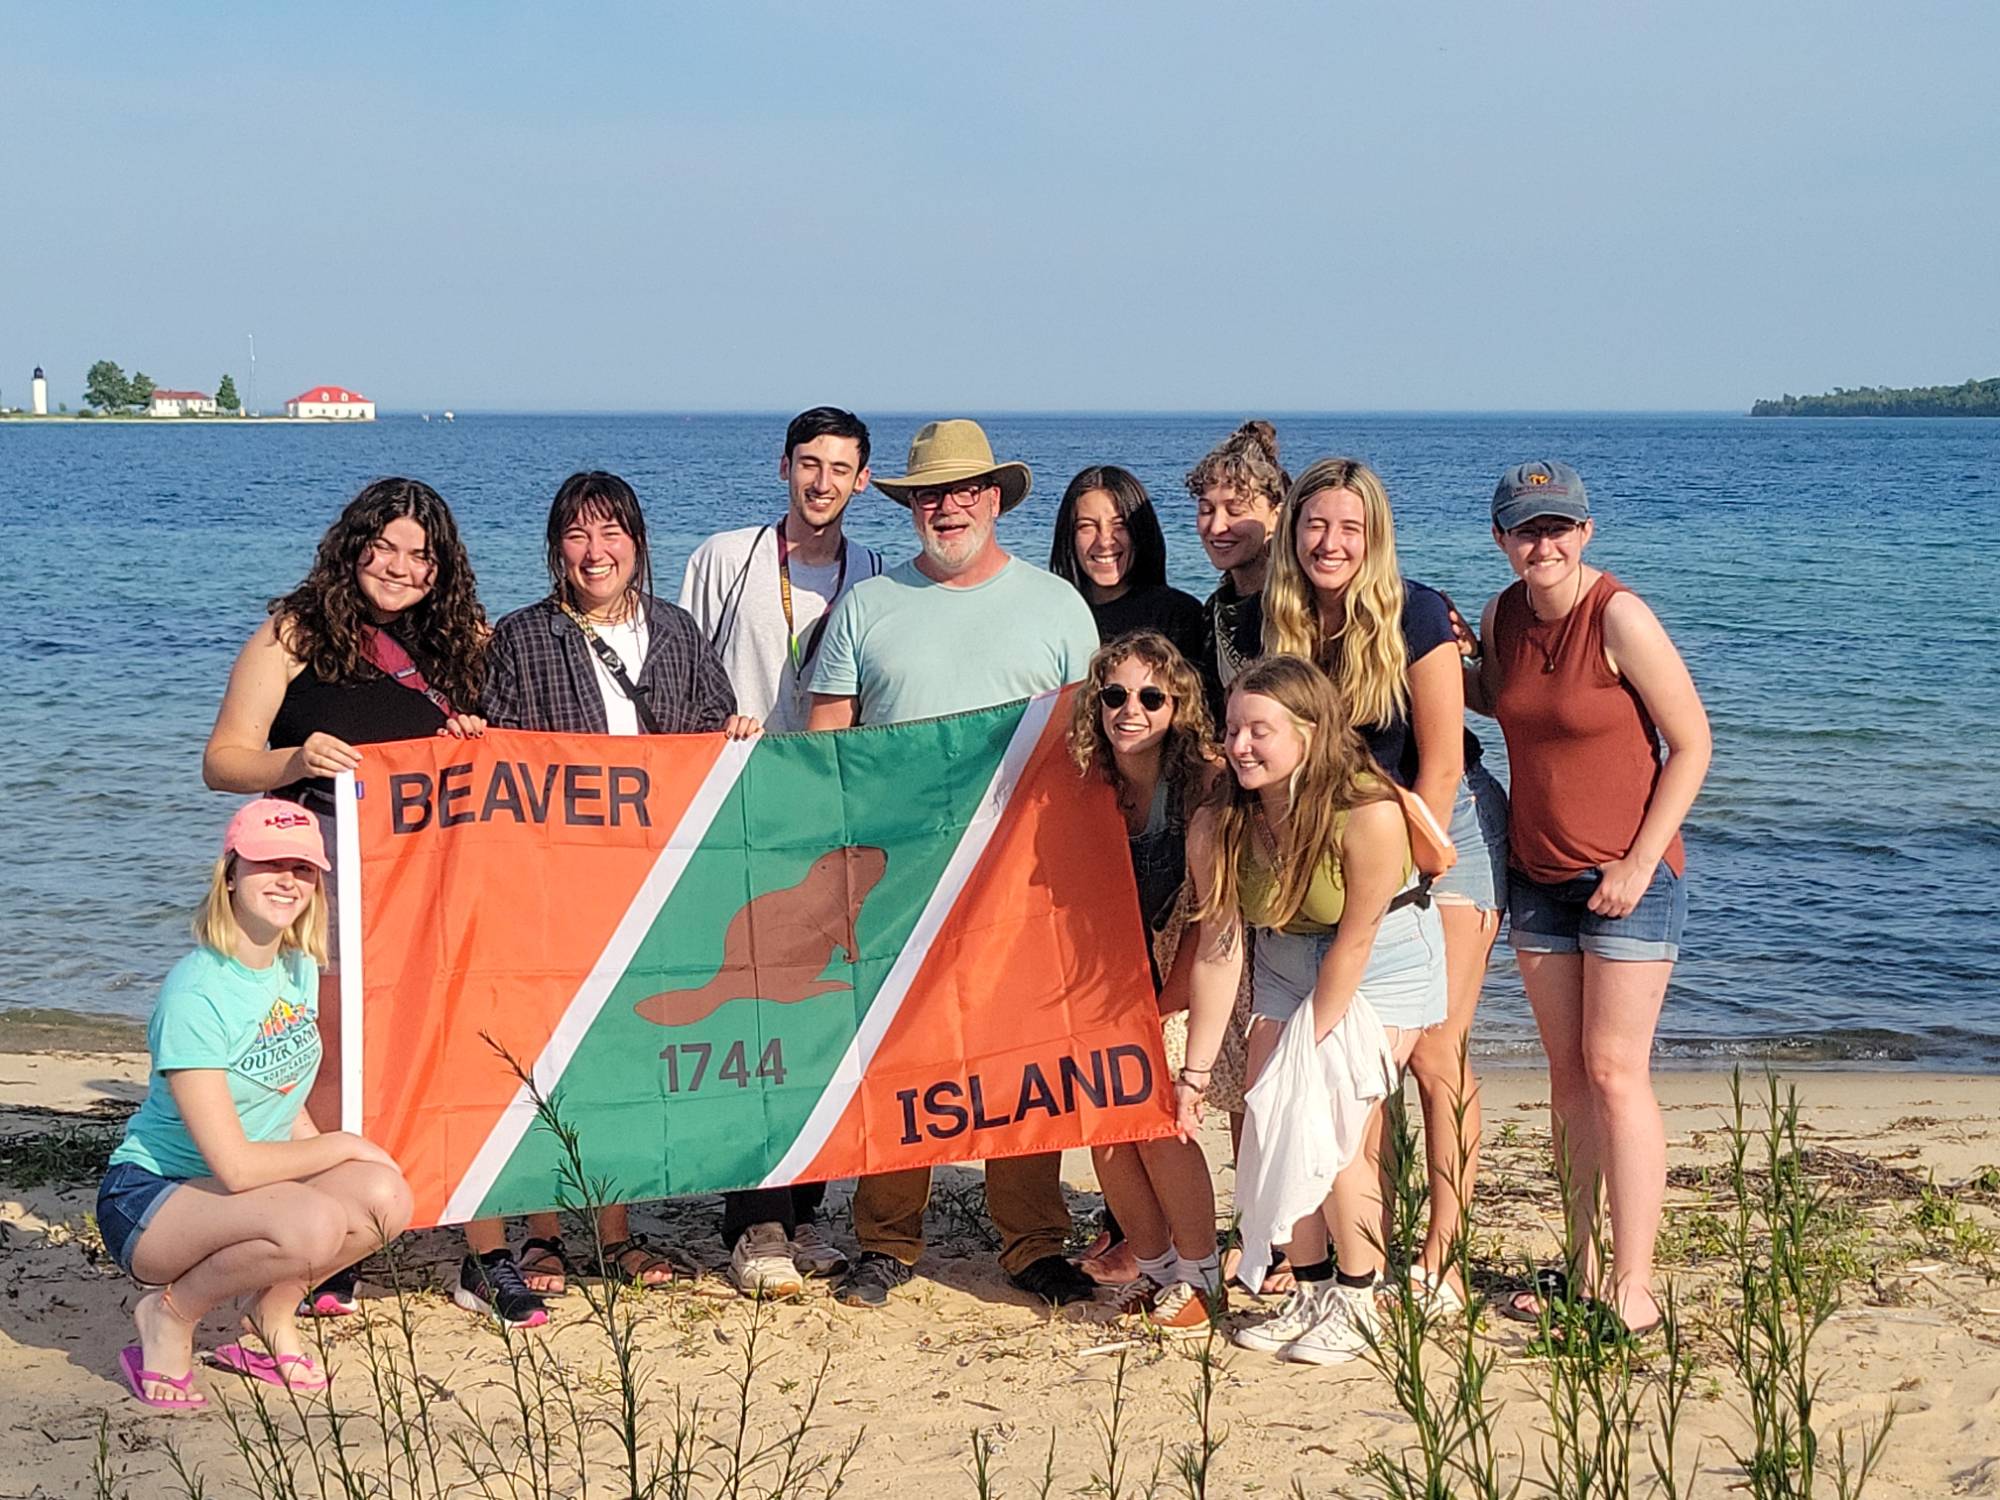 Group Photo of Beaver Island Participants on the beach holding Beaver Island flag